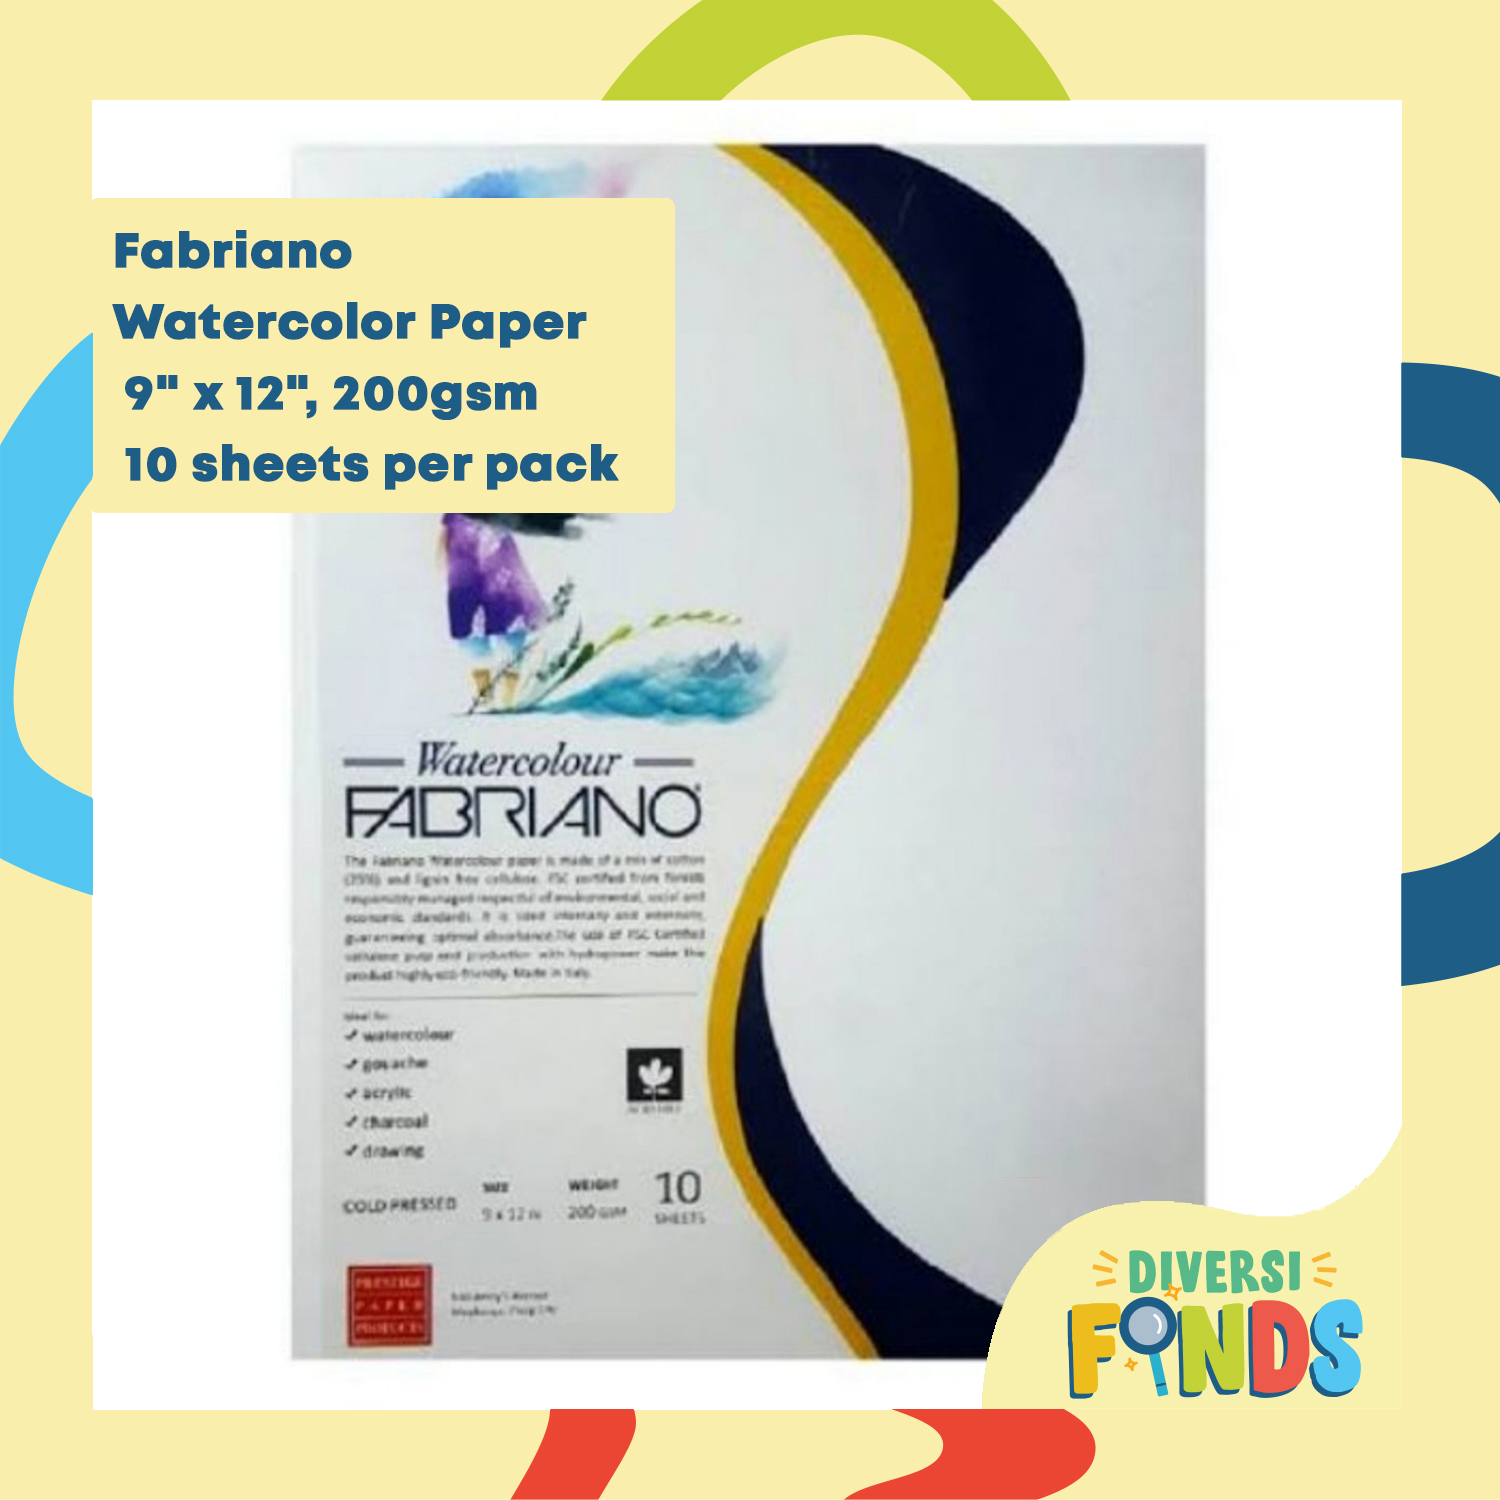 FABRIANO 200gsm watercolor paper 10pcs per pack 9x12 (2 packs minimum)